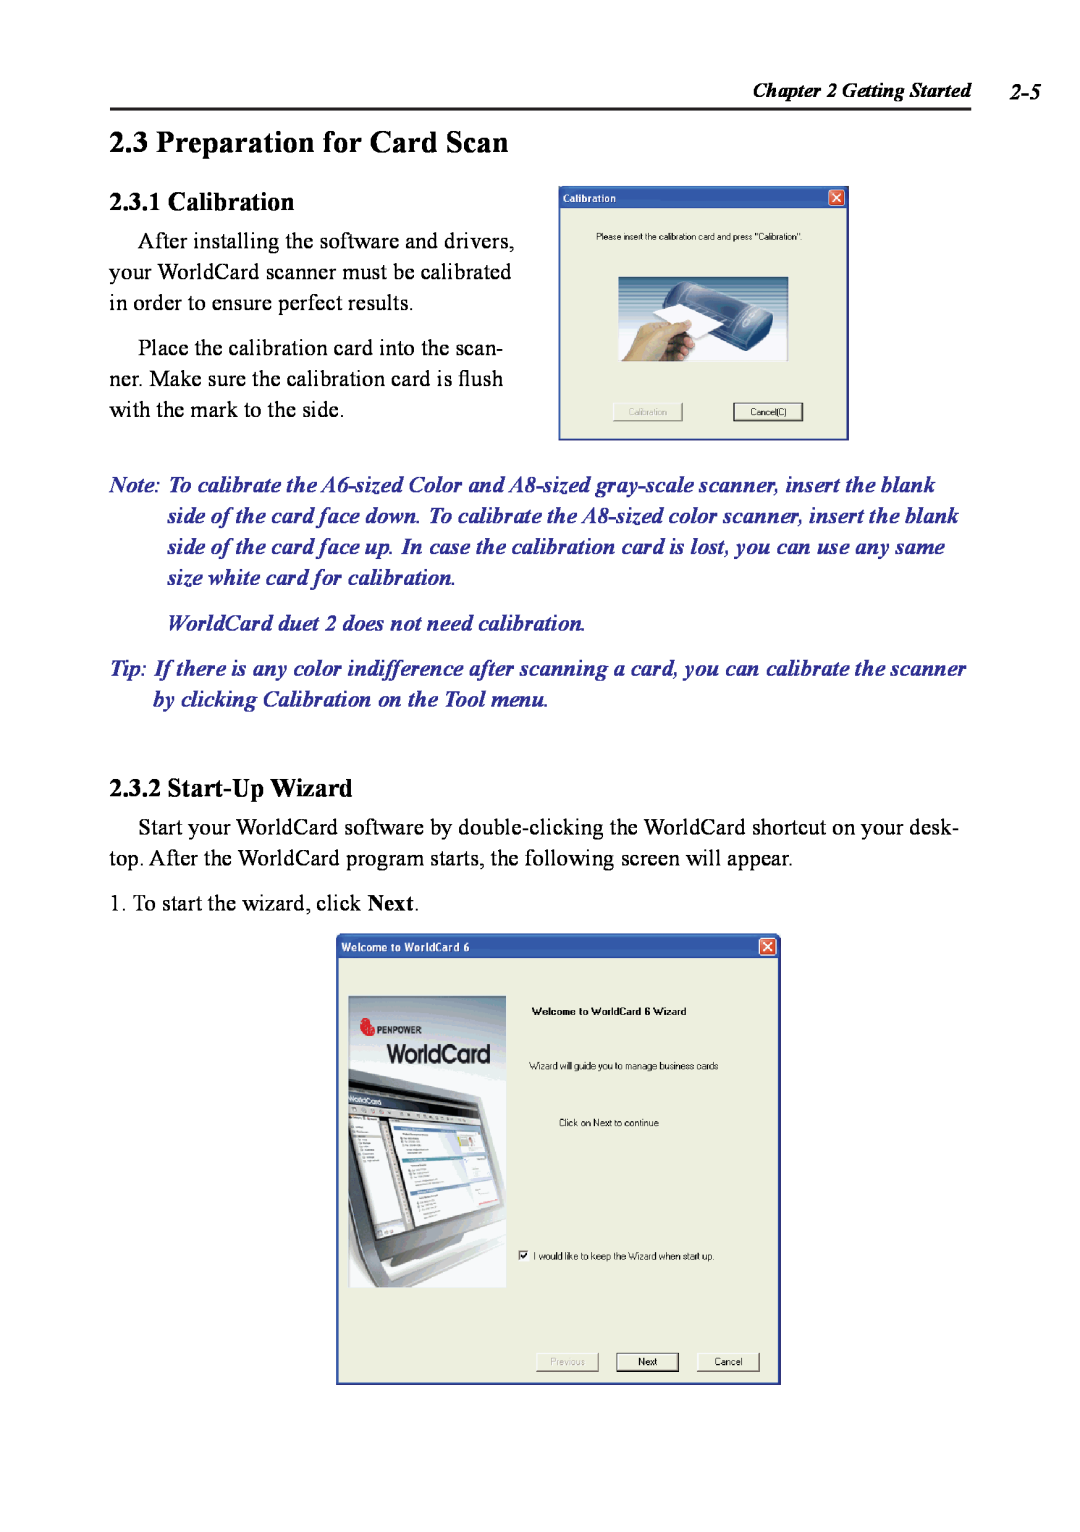 Penpower duet 2 user manual Preparation for Card Scan, Calibration, Start-UpWizard 